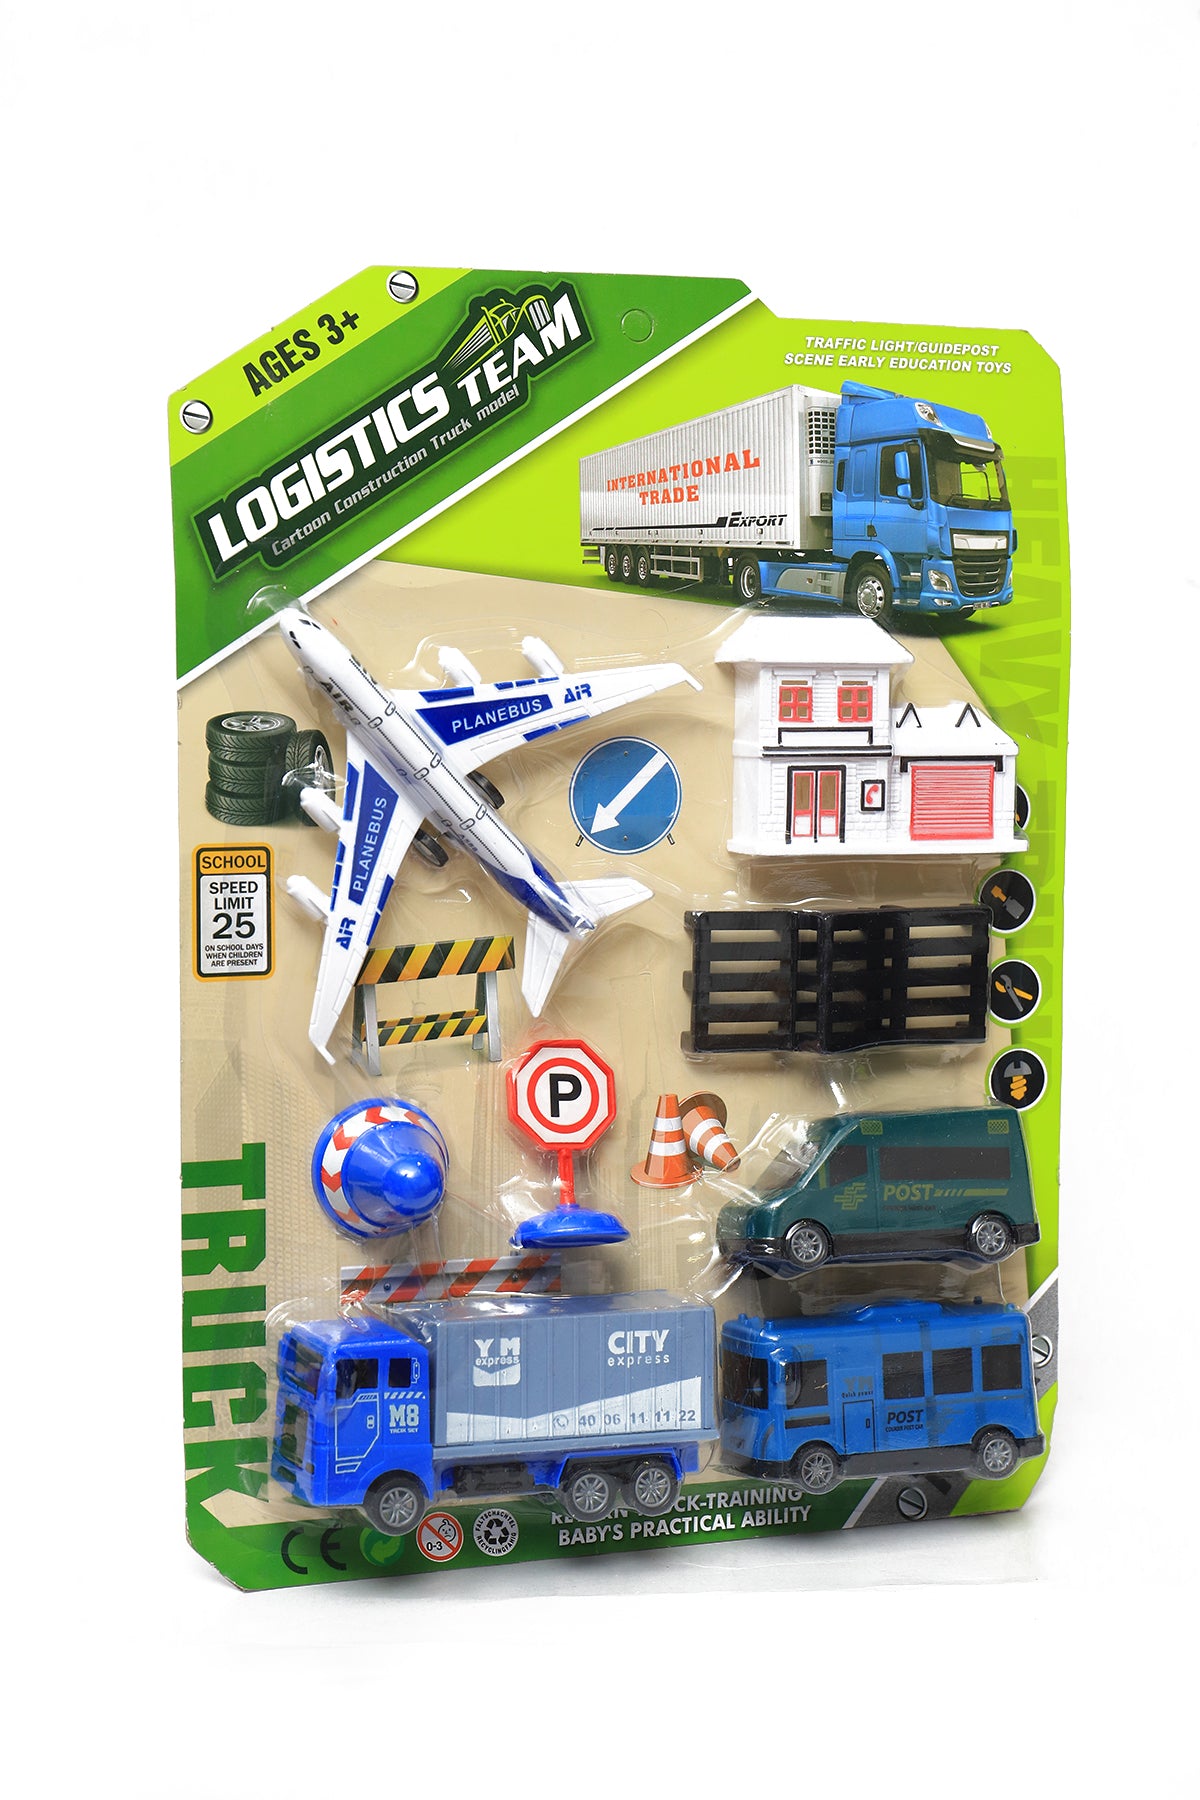 Kids Logistics Vehicle Play Set